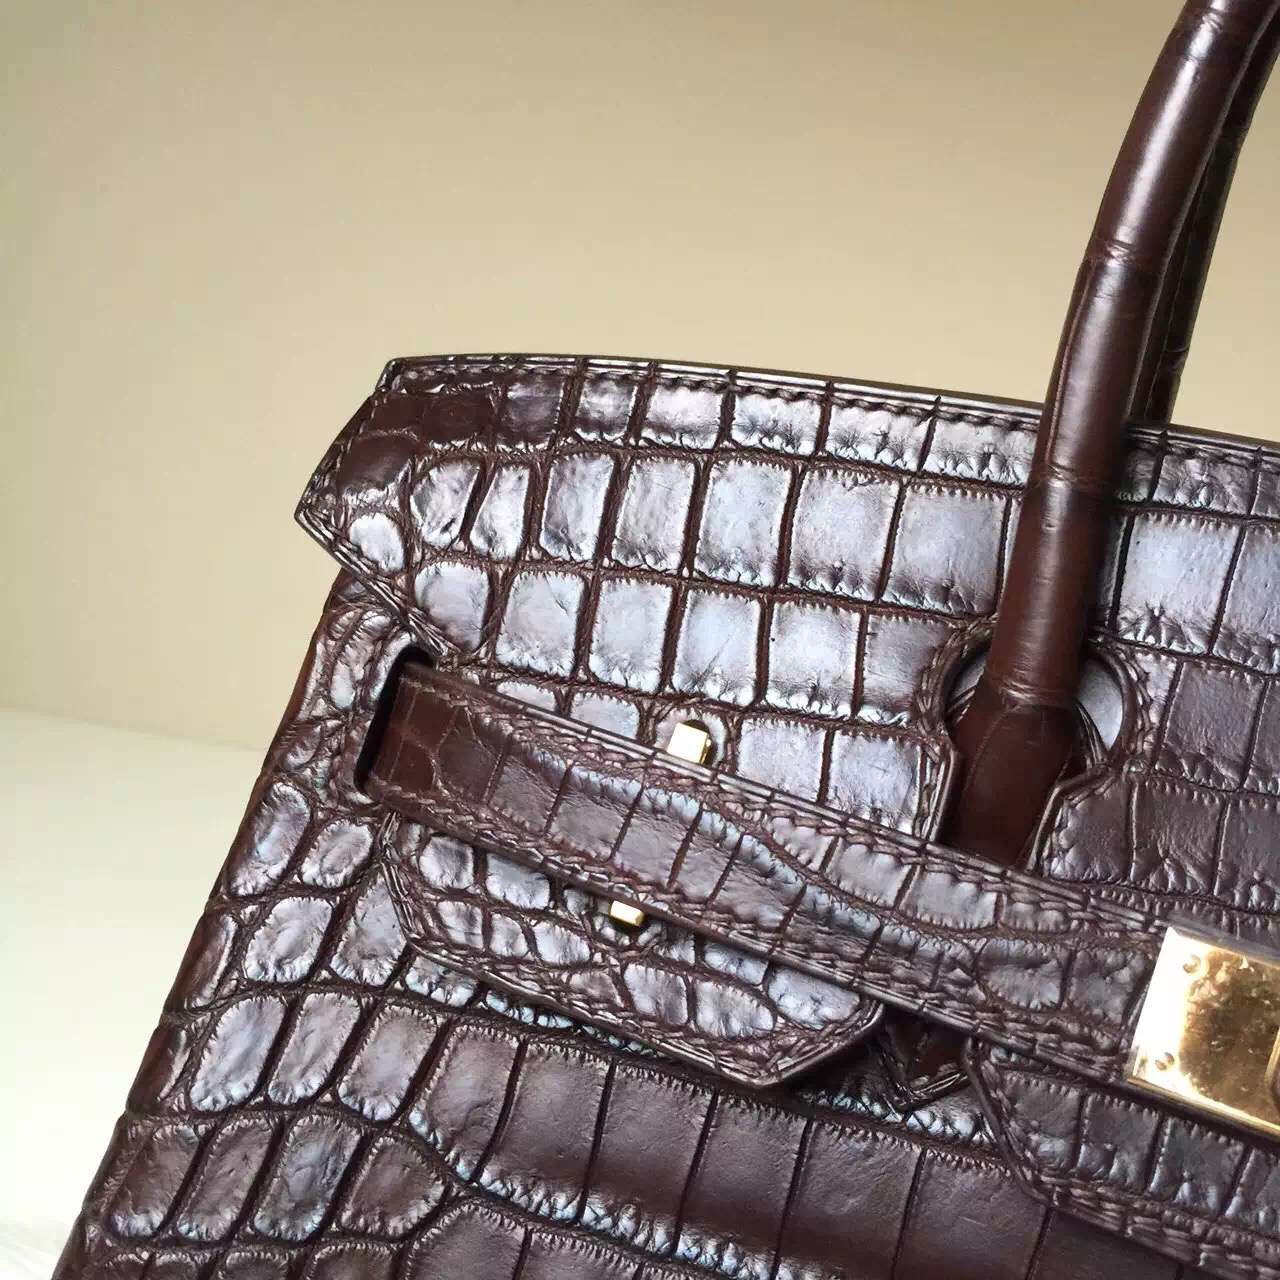 Online Store Hermes Coffee Color Crocodile Matt Leather Birkin Bag 30cm